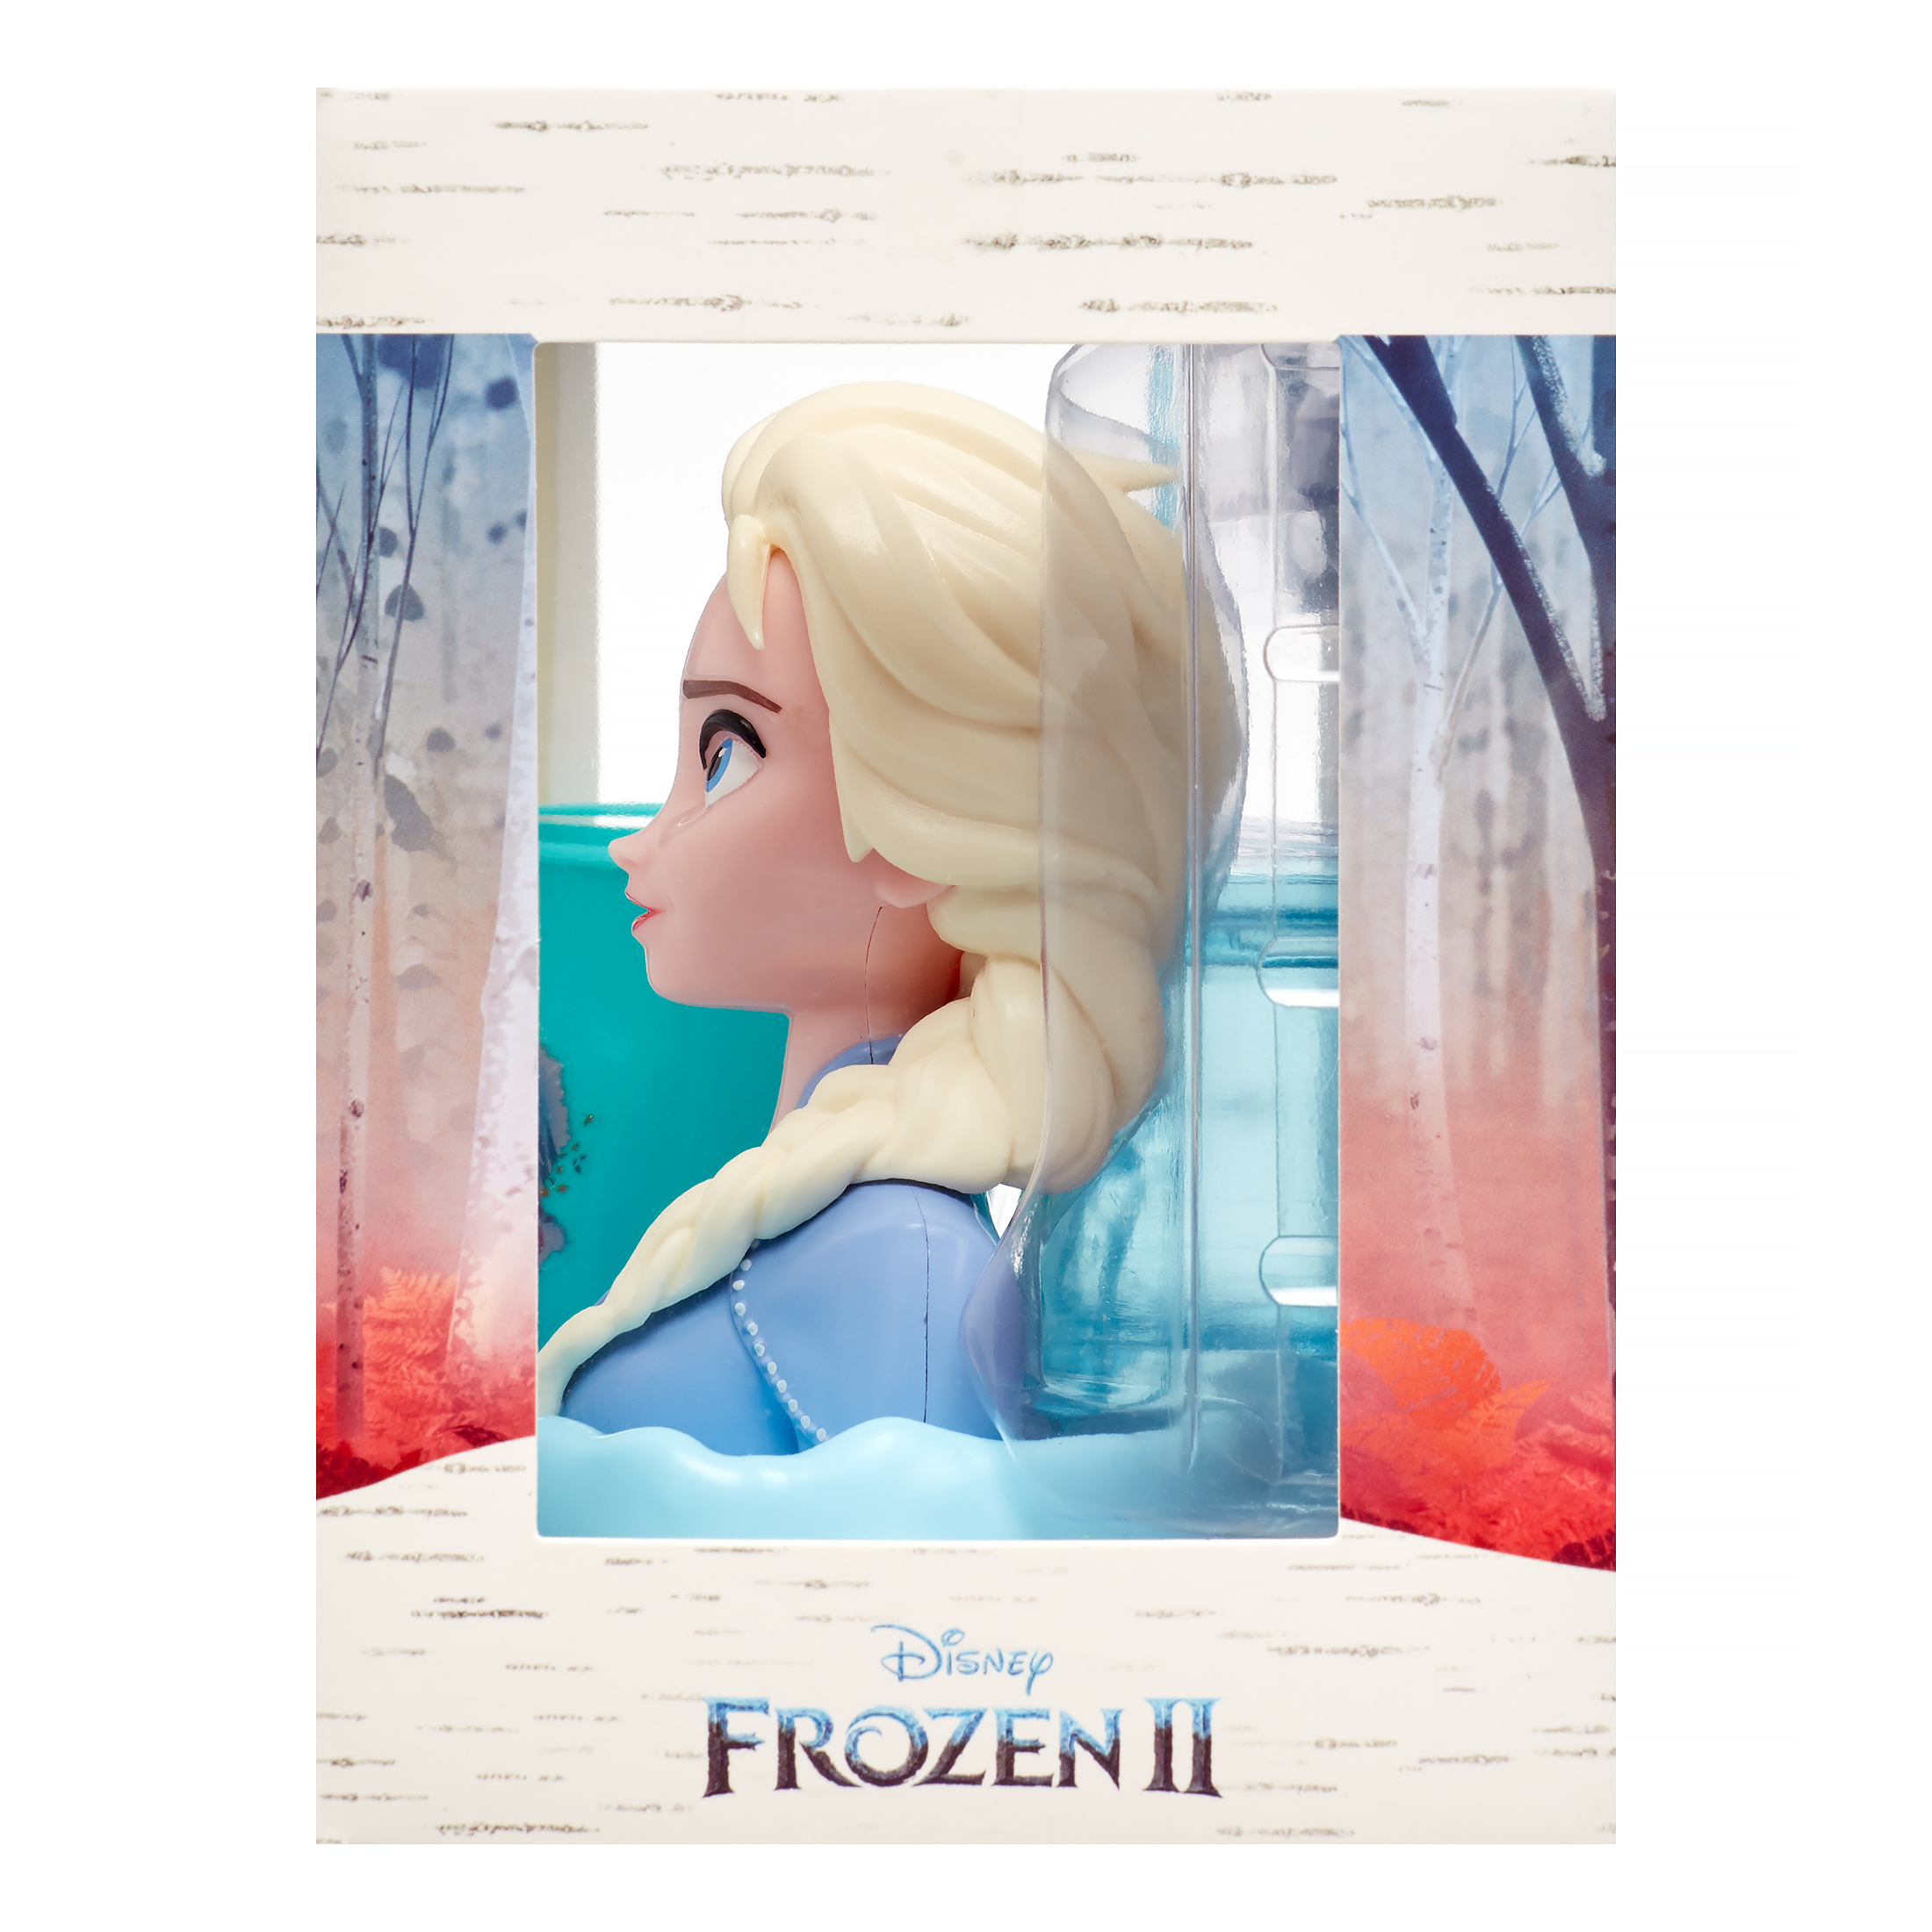 Disney Frozen II 3-Piece Great Smile Elsa Toothbrush and Holder Set - image 6 of 6